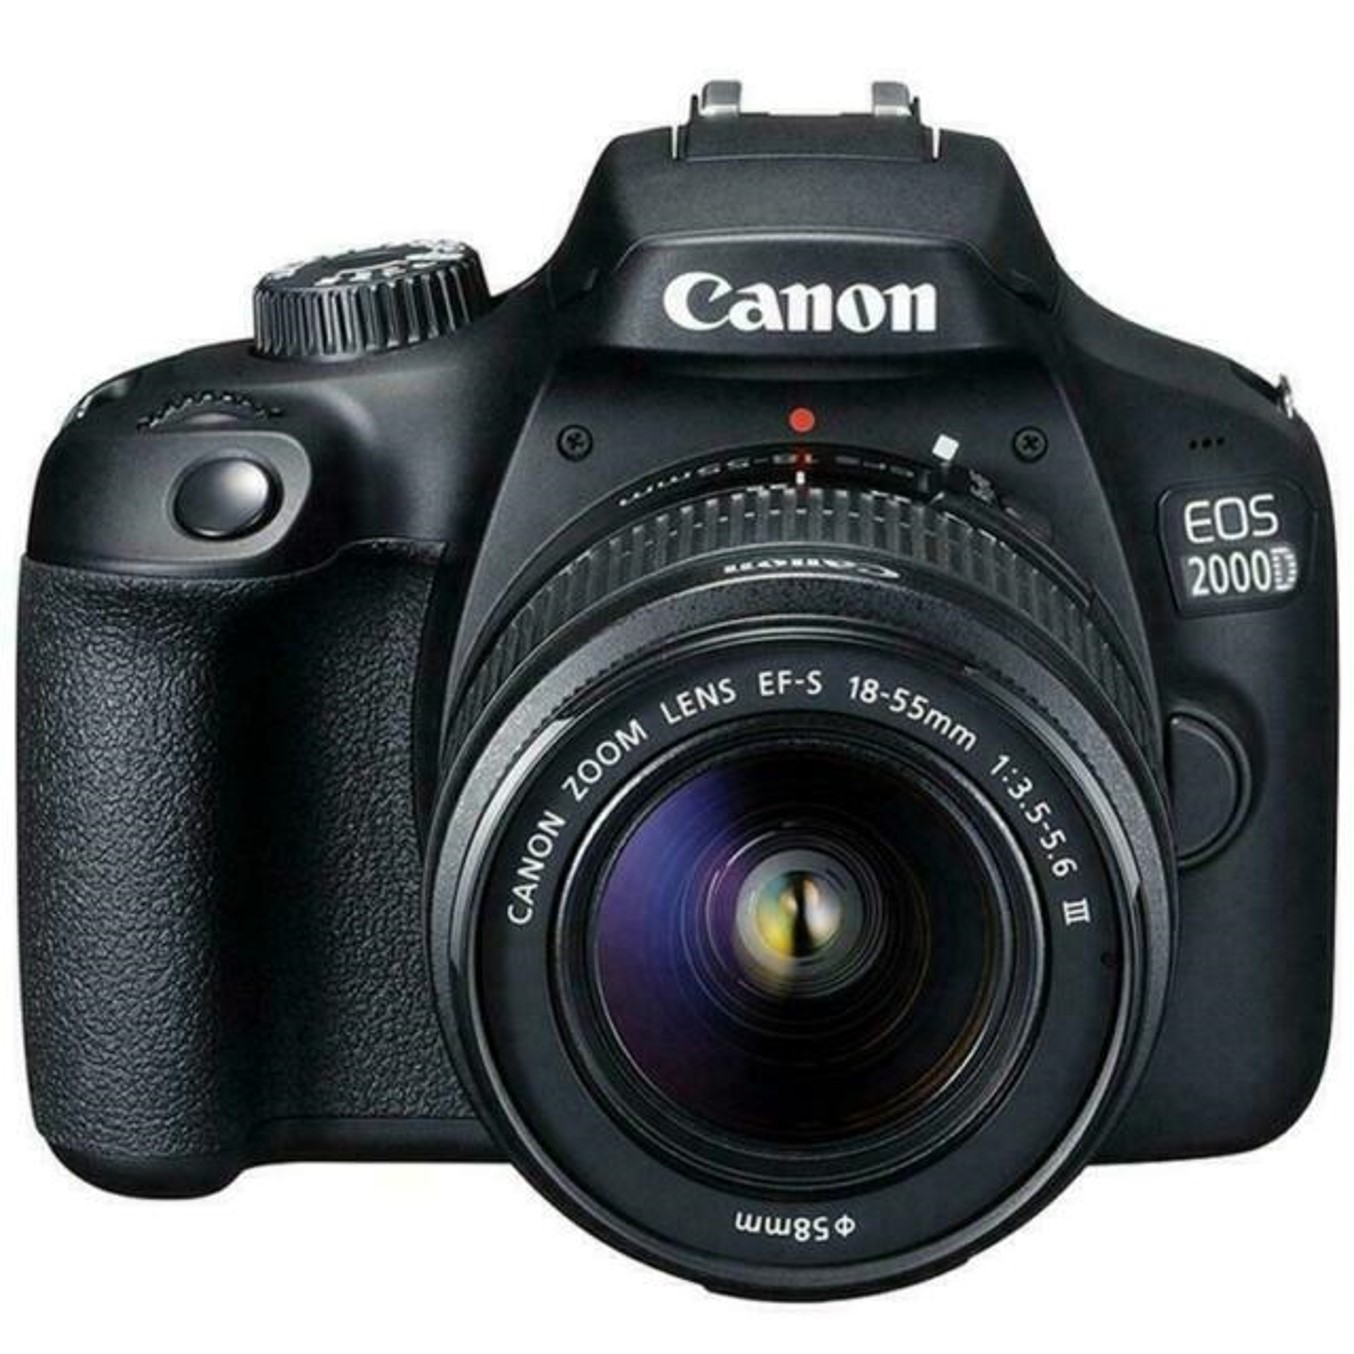 Camara digital reflex canon eos 2000d + 18 - 55 - cmos -  24.1mp -  digic 4+ -  full hd -  9 puntos referencia -  wifi -  nfc